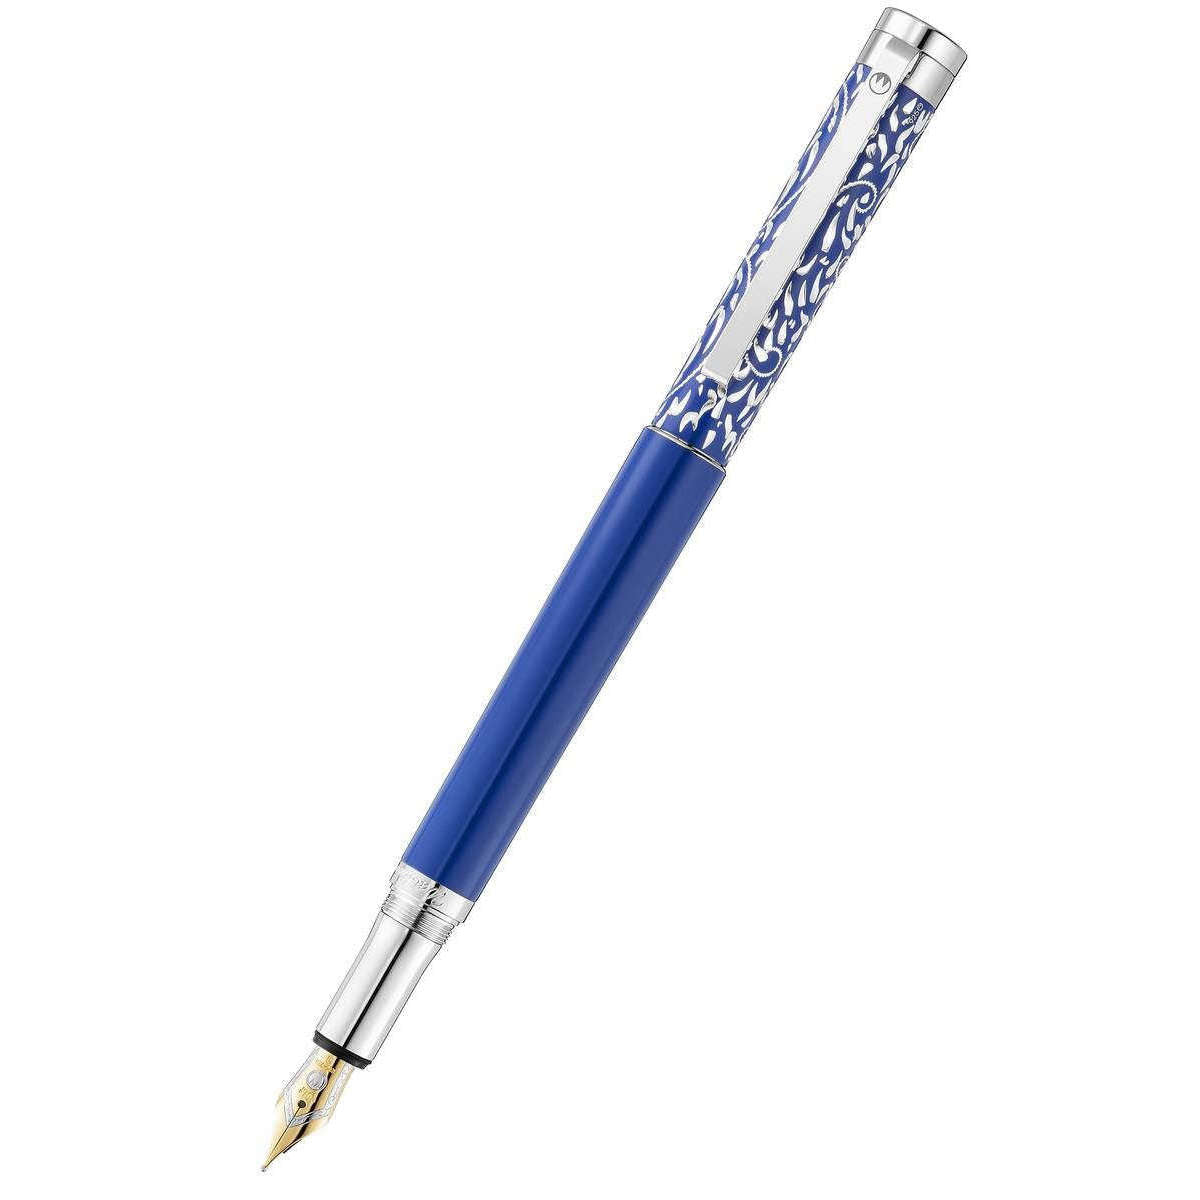 Waldmann Pens Xetra Vienna Special Edition 18ct Gold Nib Fountain Pen - Blue/Silver